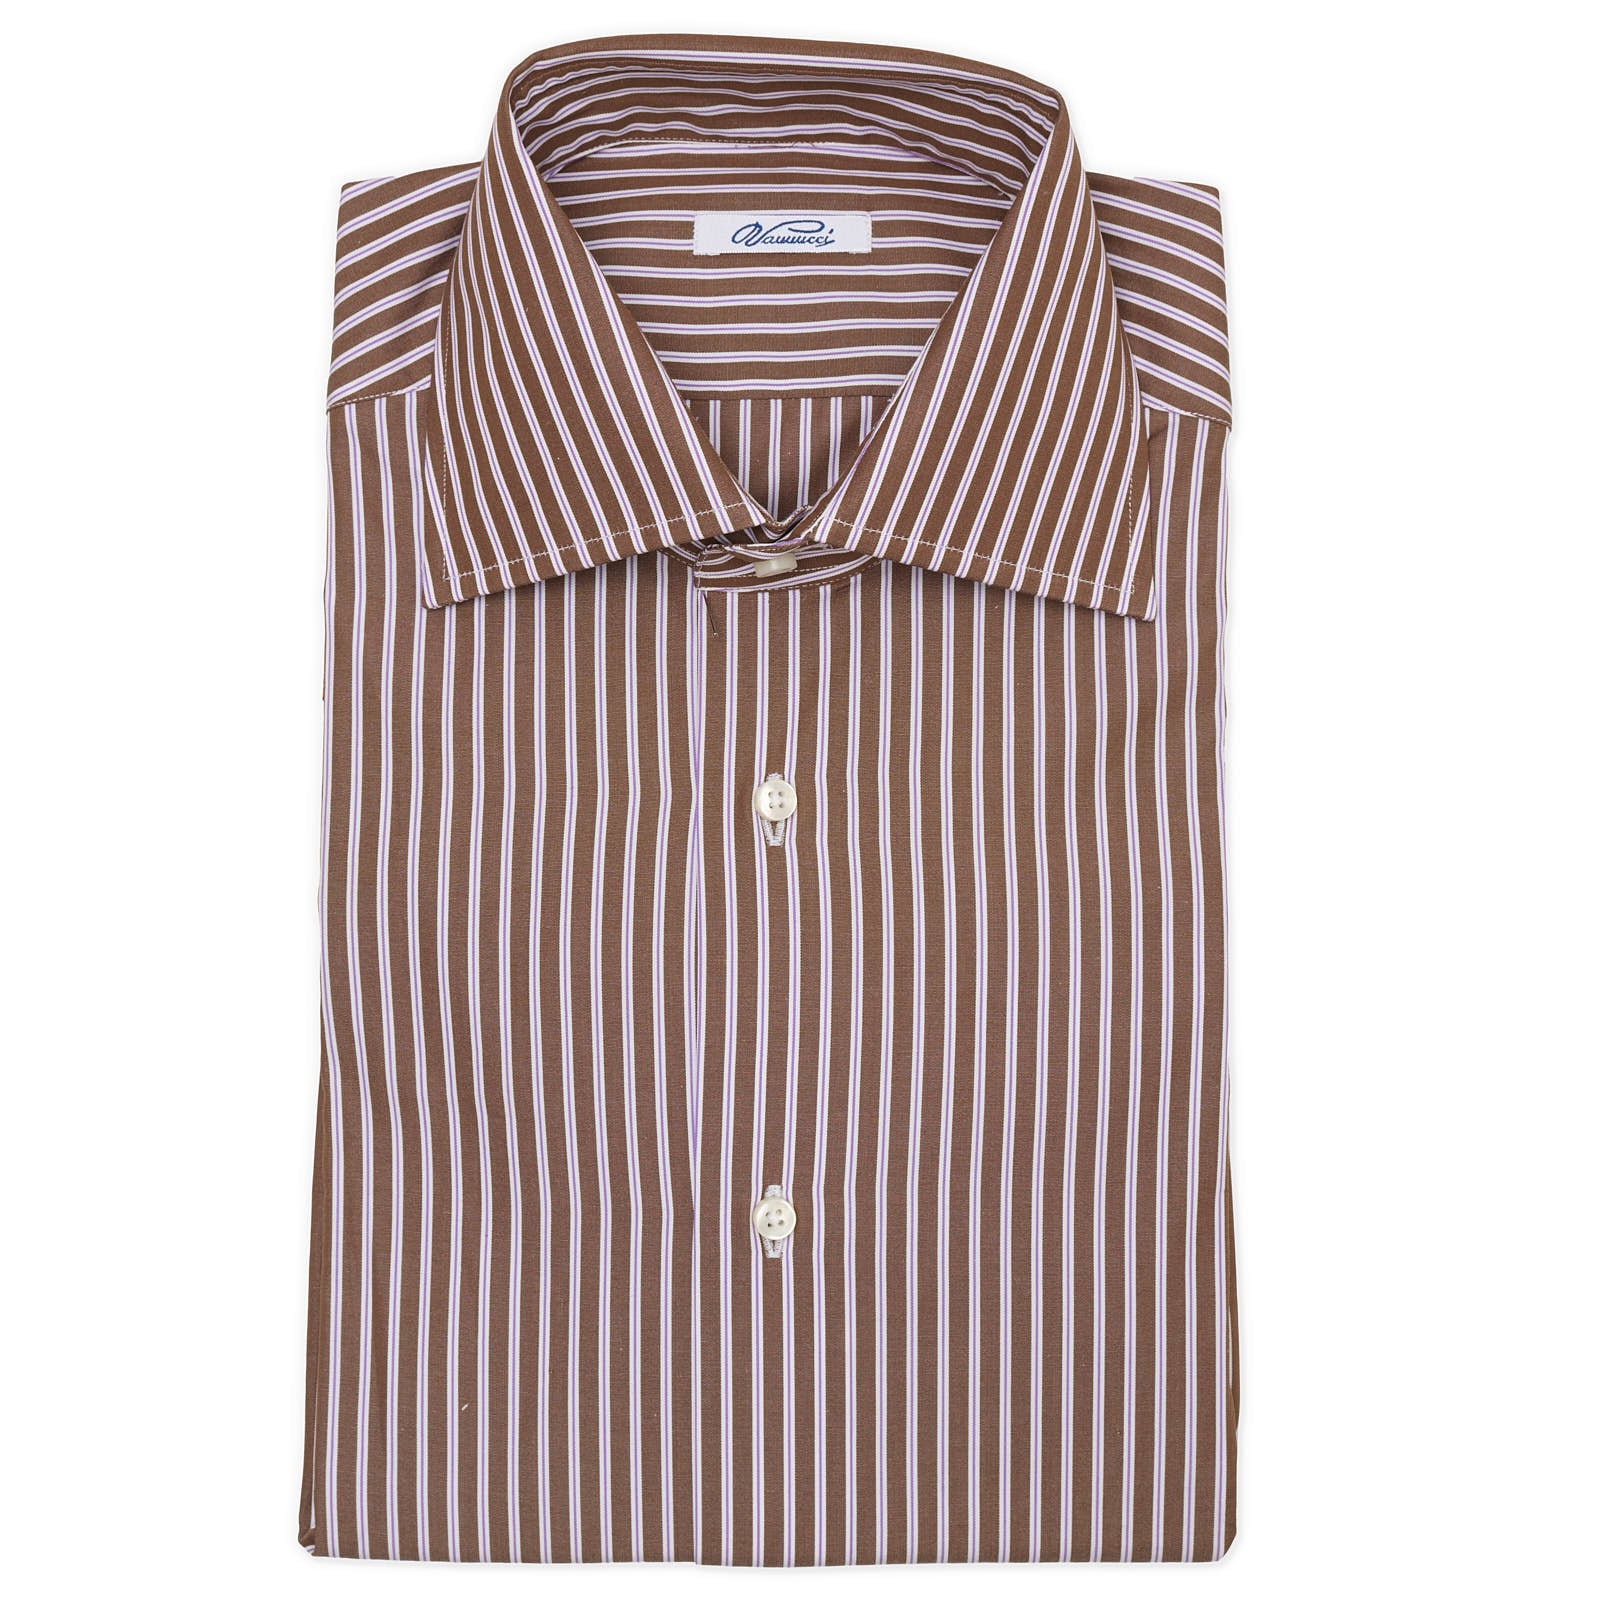 VANNUCCI Milano Brown Striped Cotton Dress Shirt EU 40 NEW US 15.75